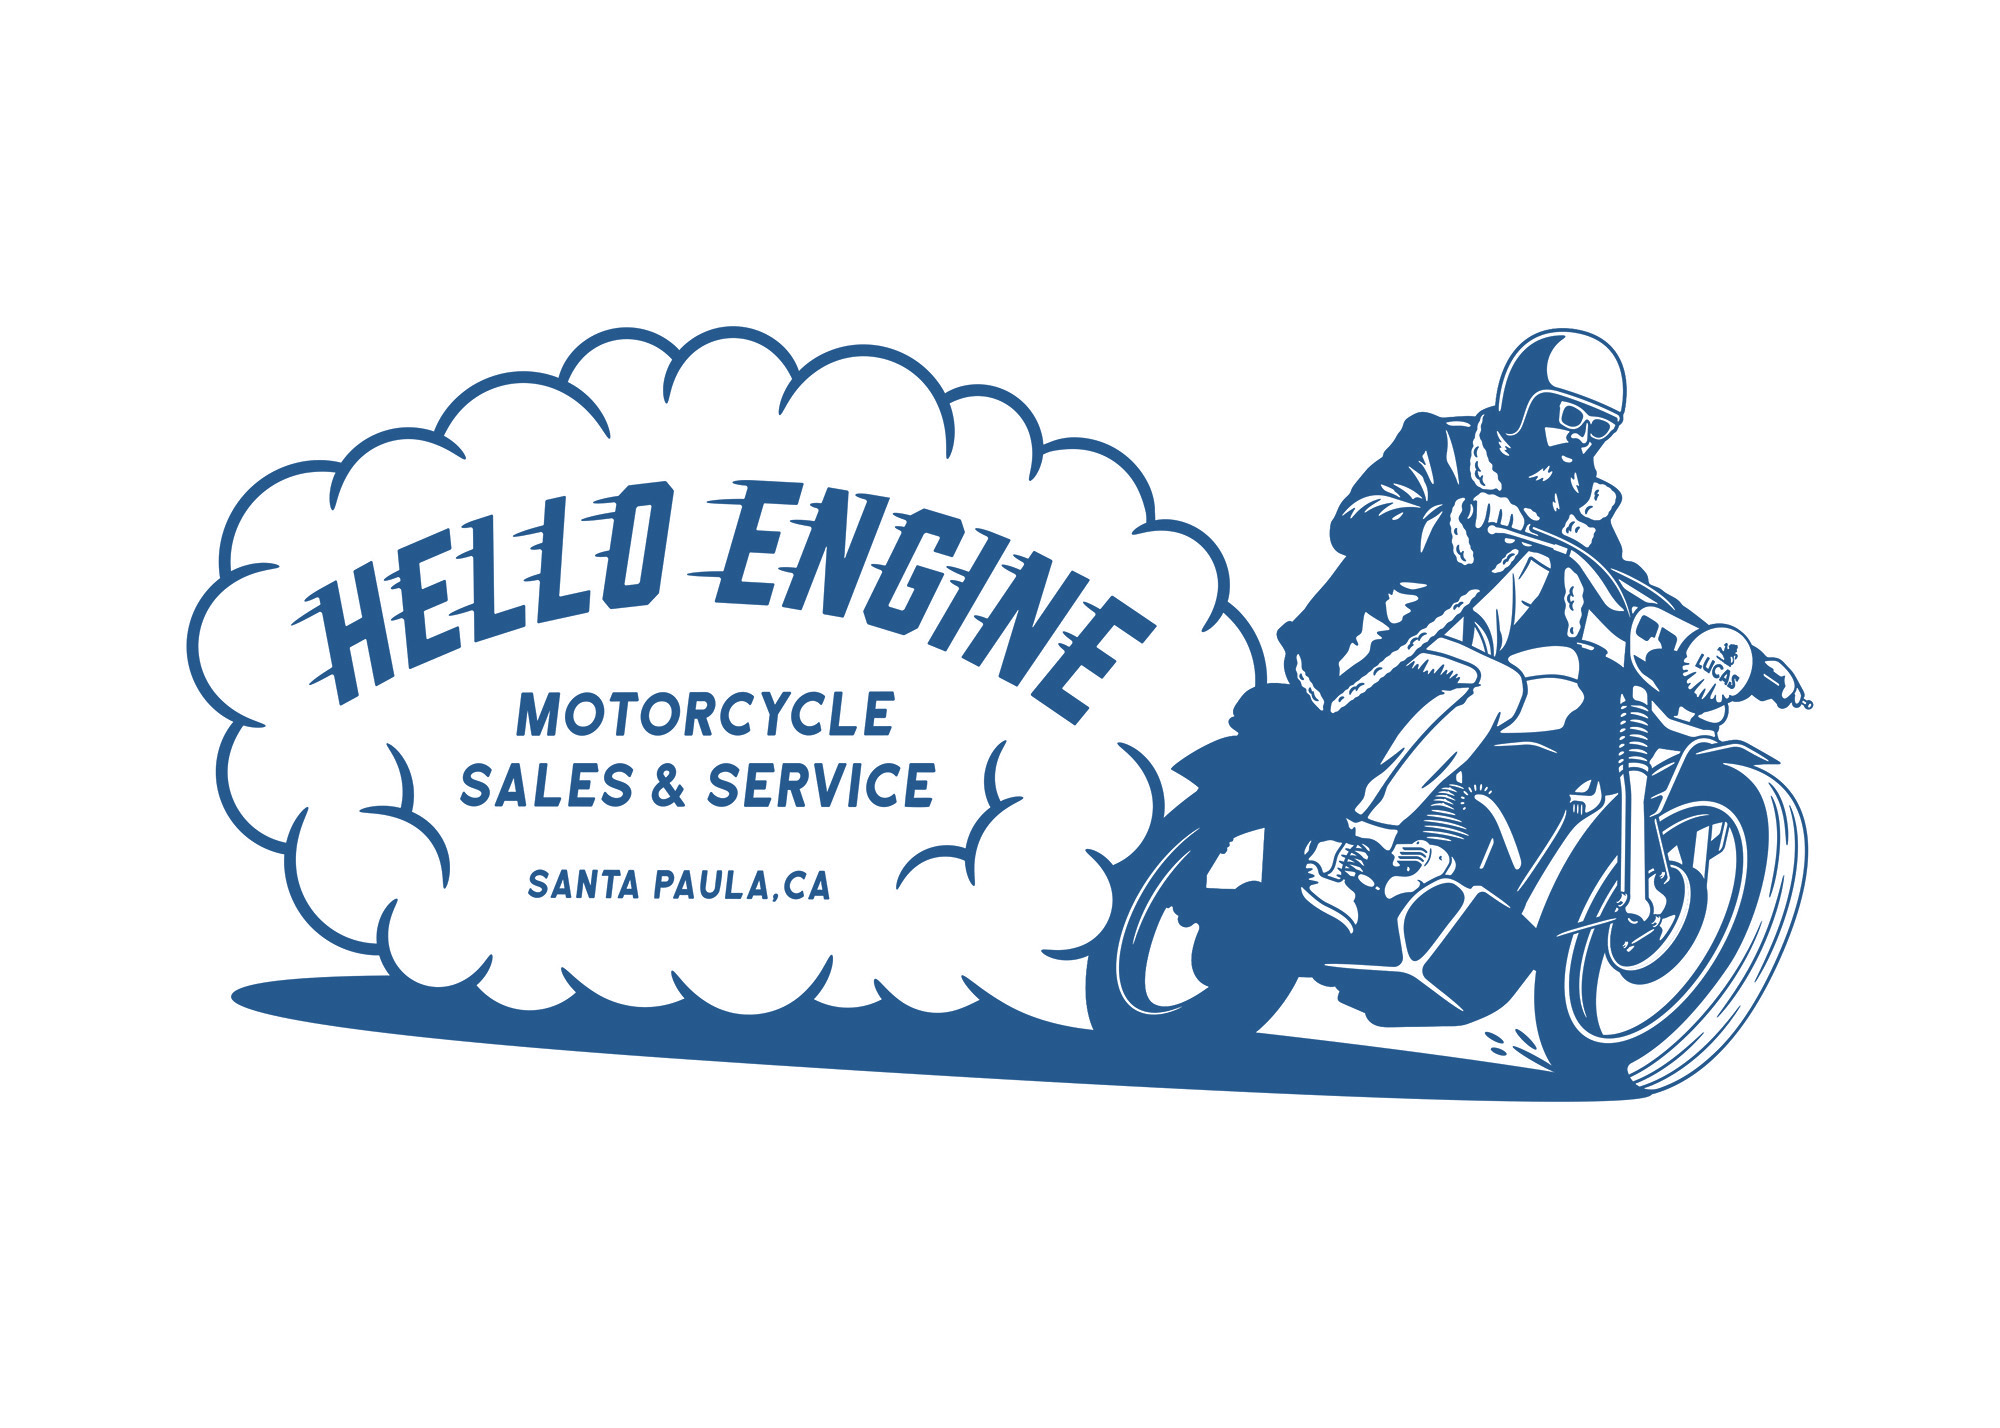 Hello_engine_graphic